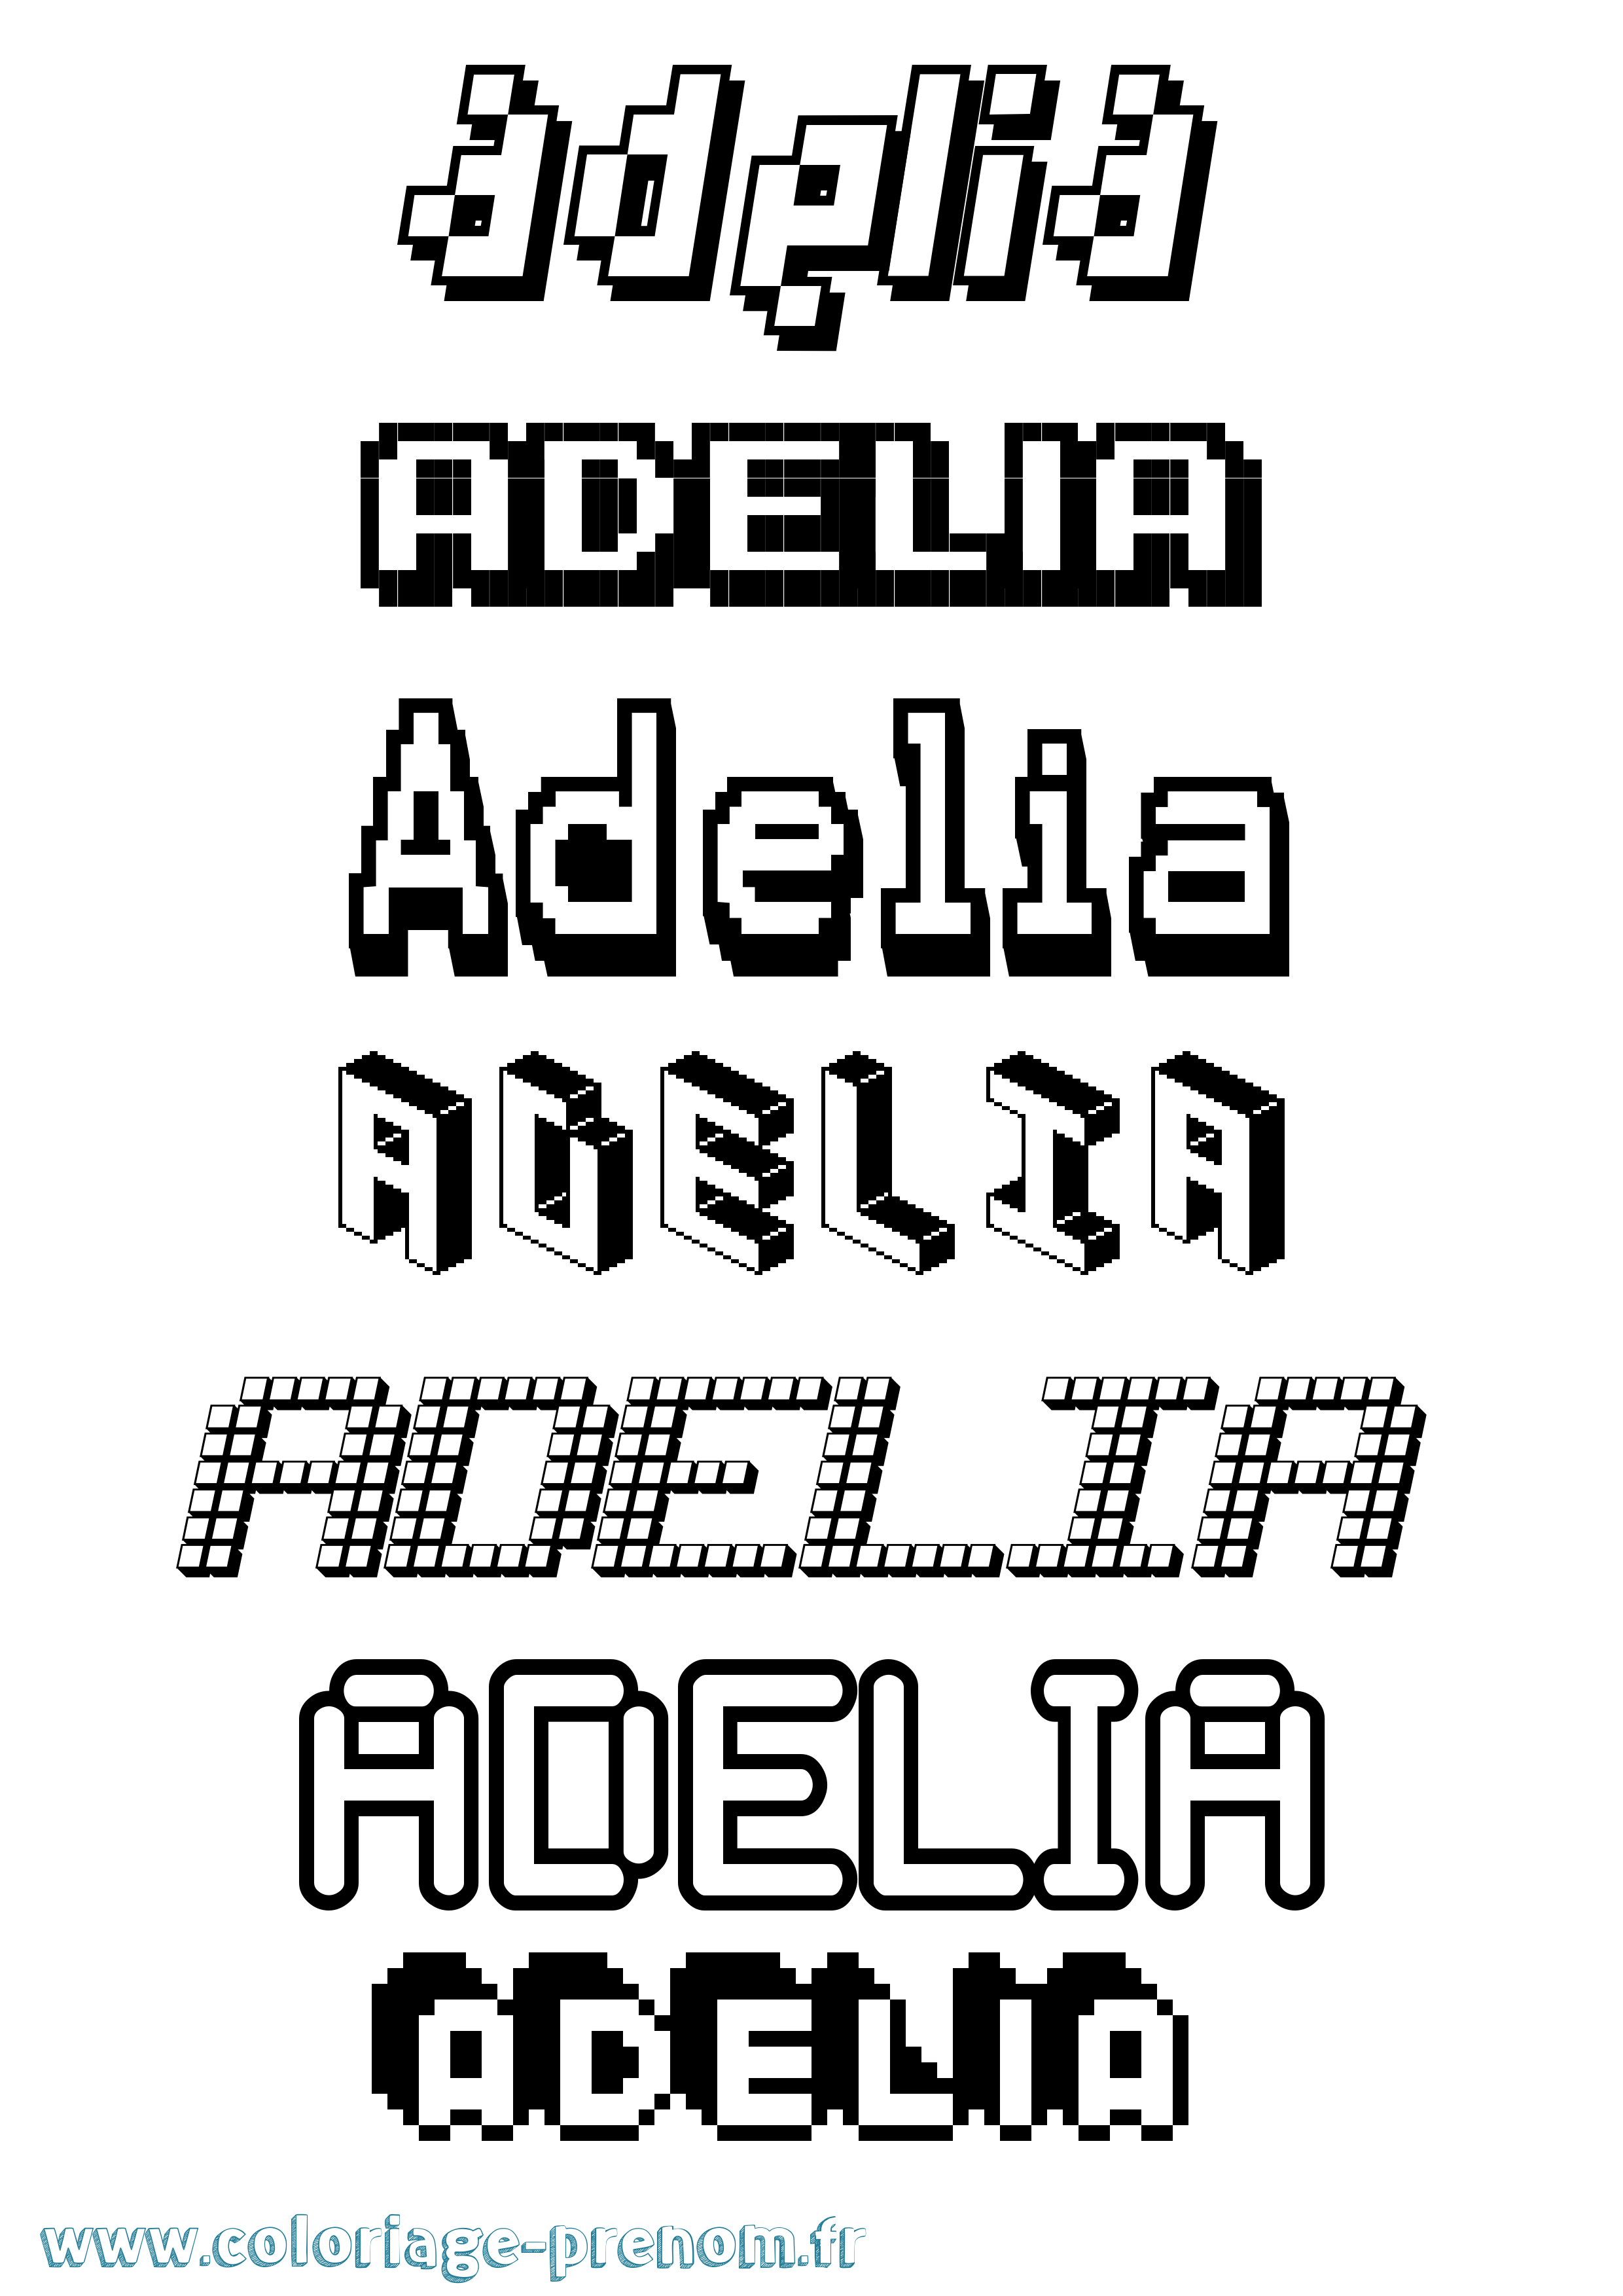 Coloriage prénom Adelia Pixel